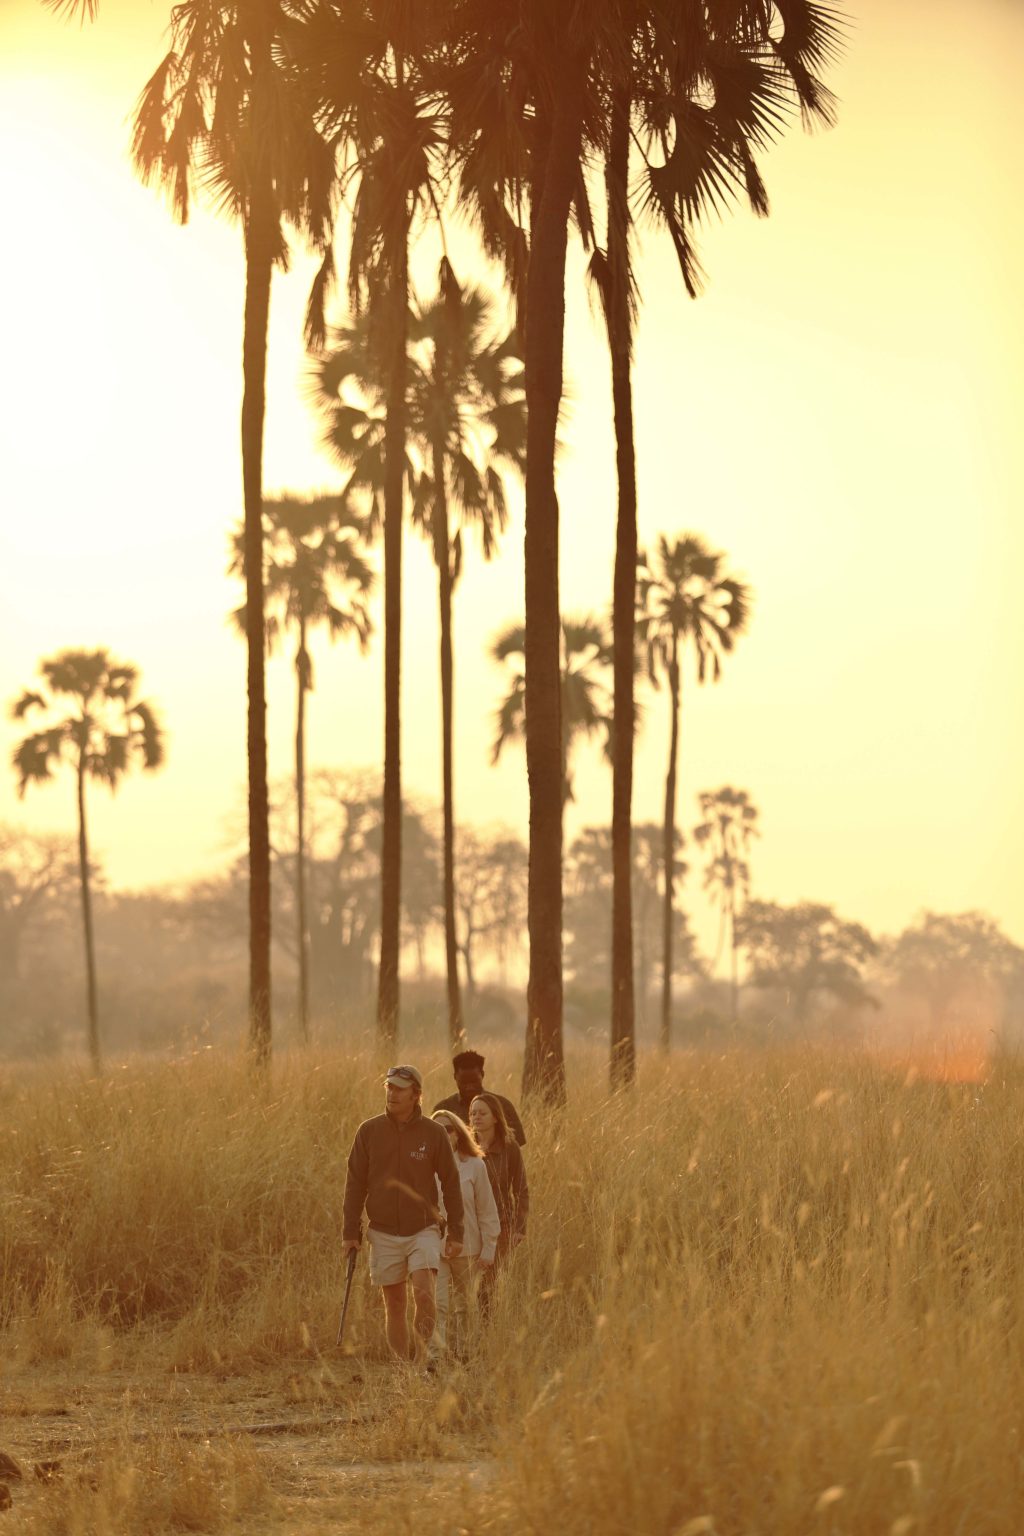 walking safari through the golden grass and palm trees at sunset in Ruaha on Tanzania safari